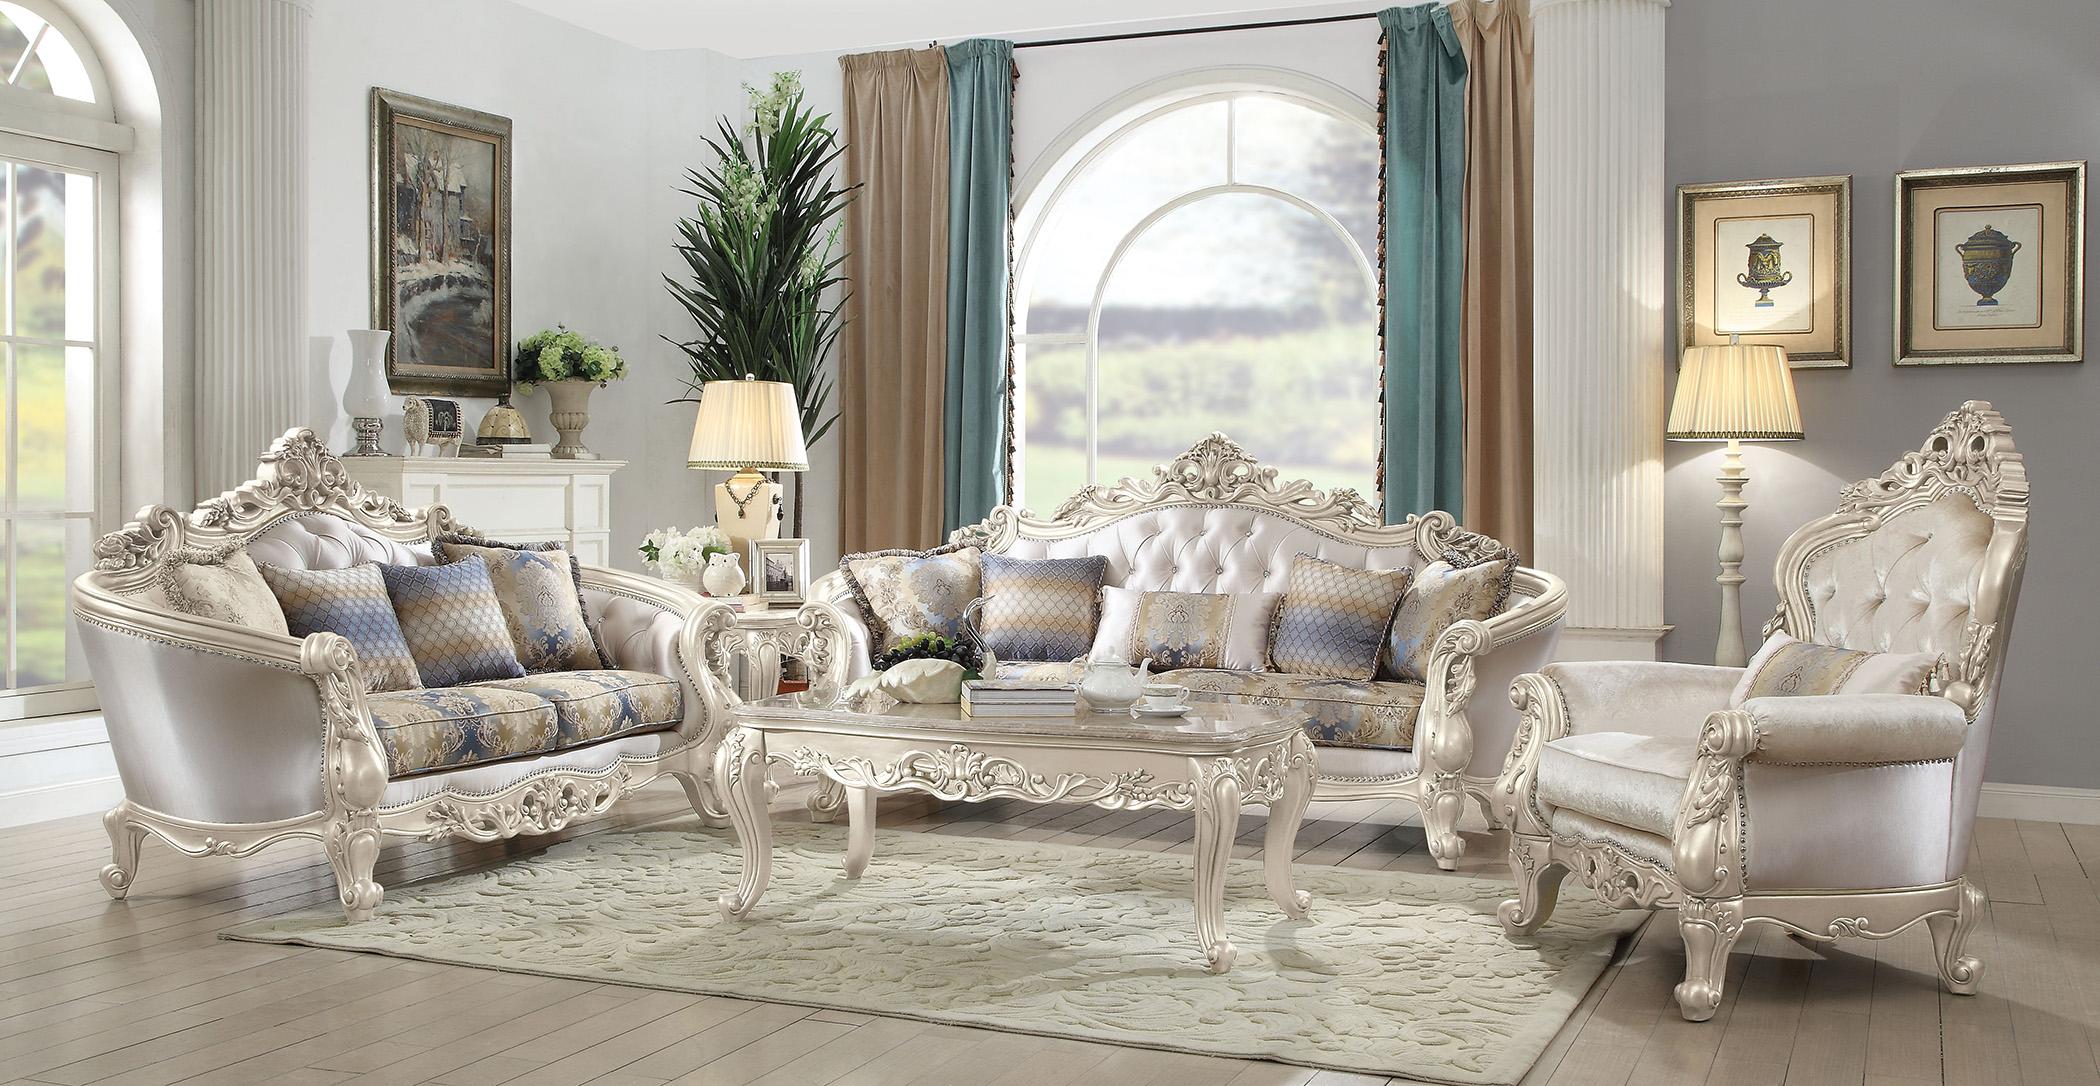 Classic, Traditional Sofa Loveseat Chair and Coffee Table Gorsedd Gorsedd-52440-Set-4 in Antique White, Cream Fabric